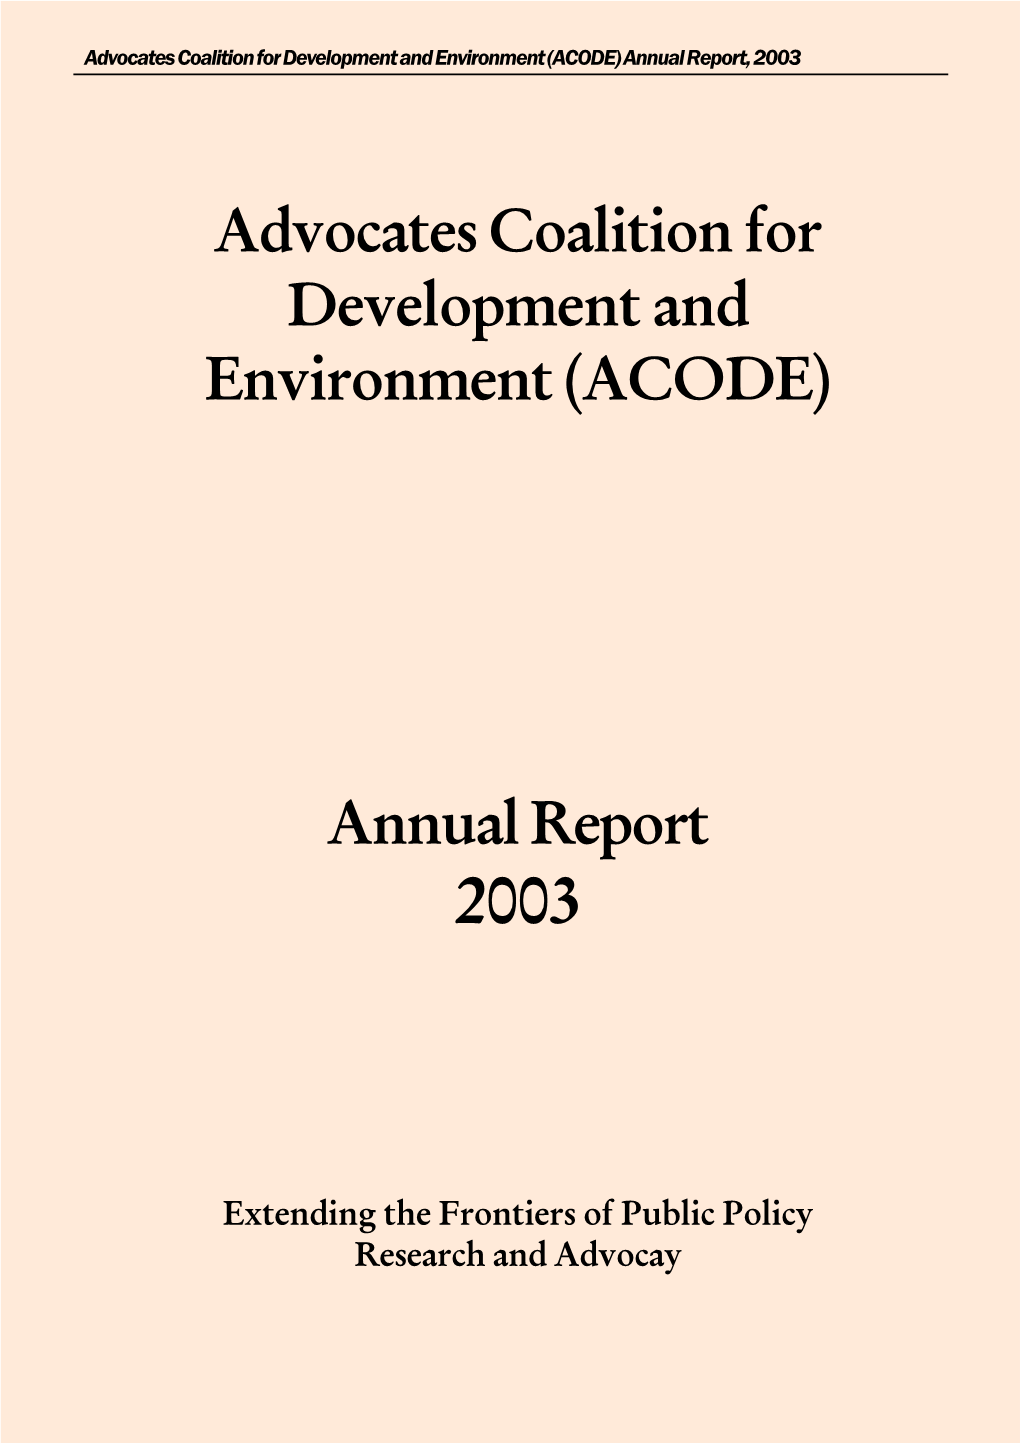 (ACODE) Annual Report, 2003